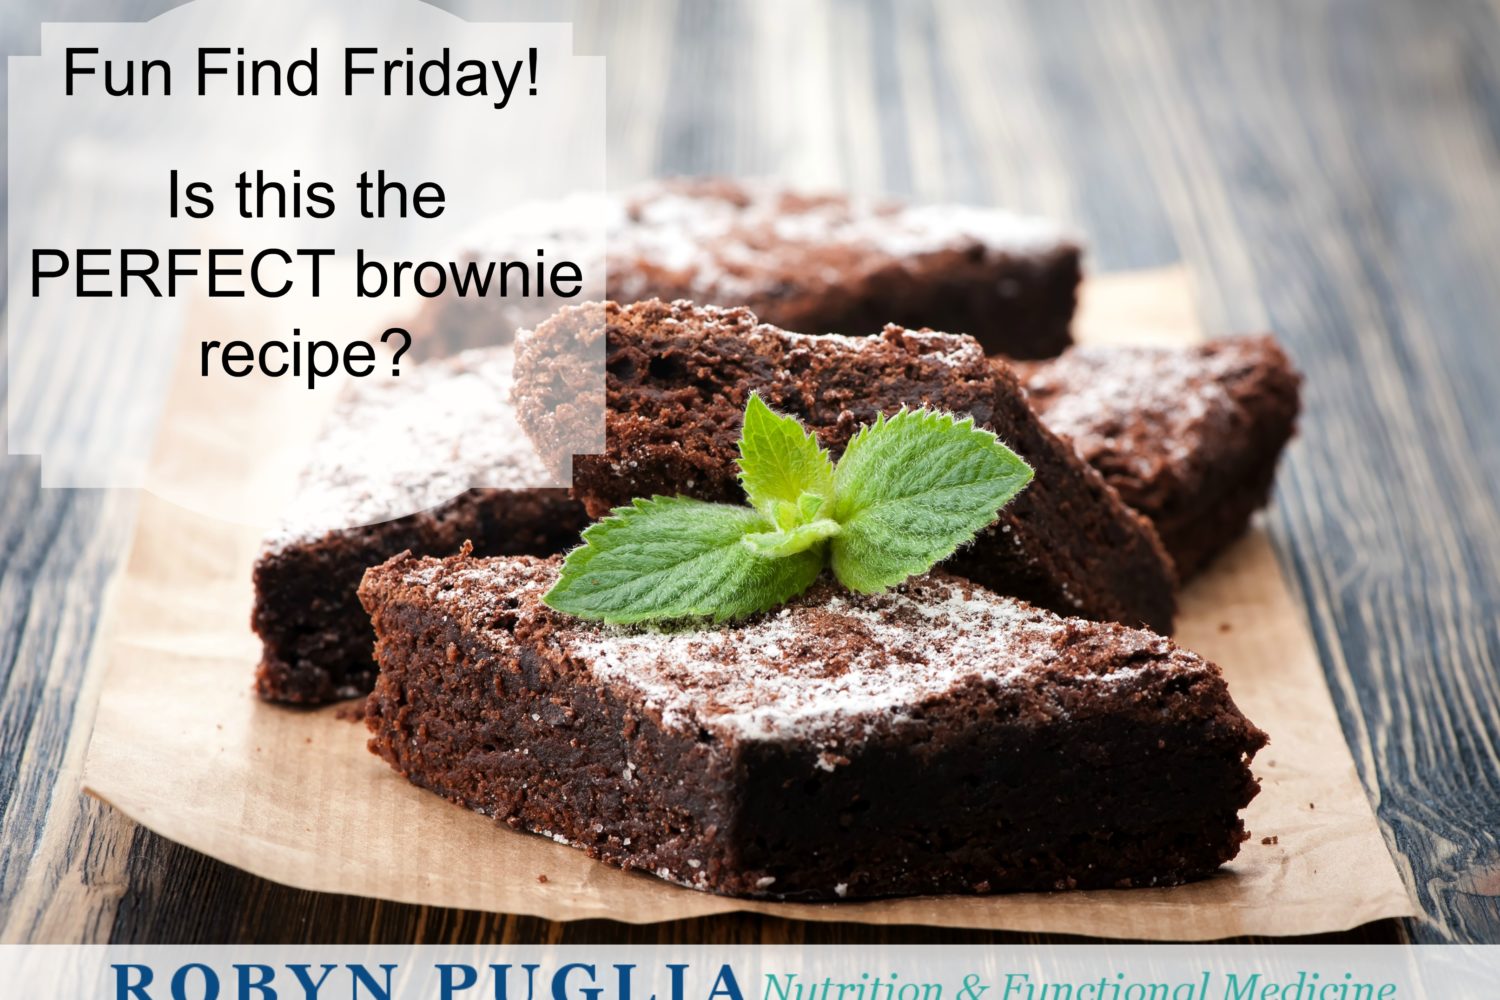 Fun Find Friday - A Brownie Recipe!